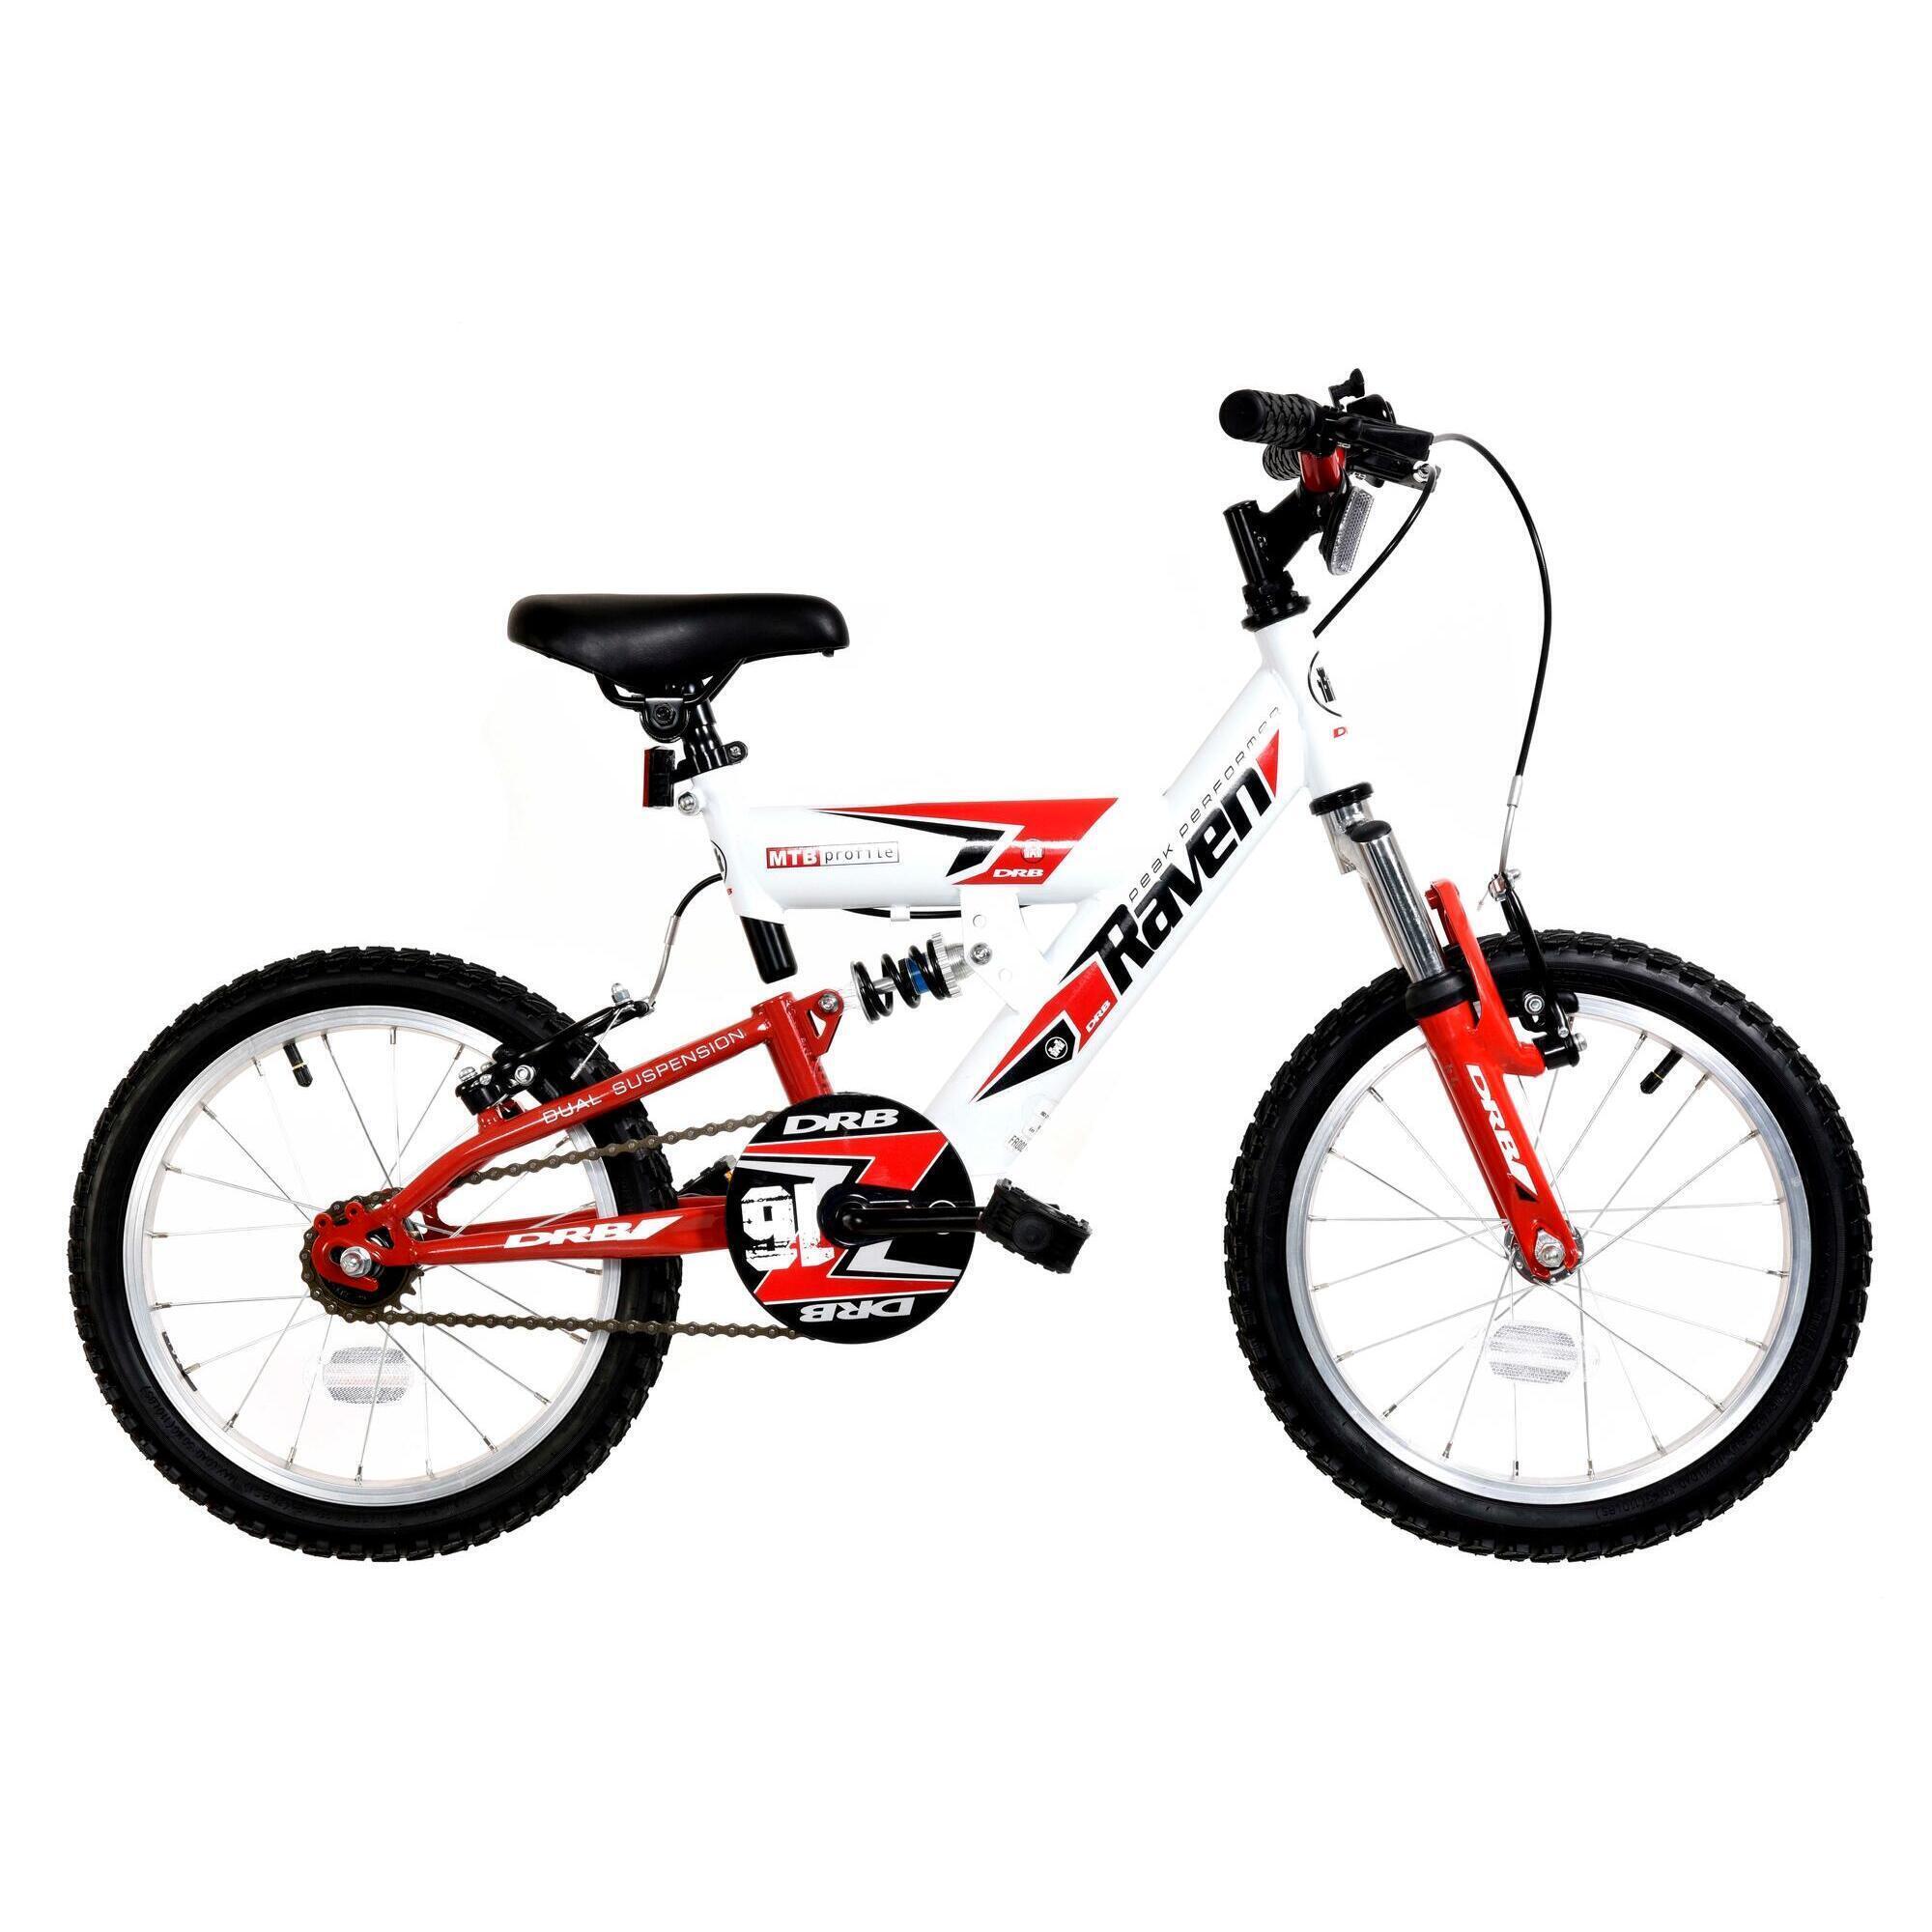 Dallingridge Raven Boys Full Suspension Mountain Bike, 16In Wheel - White/Red 1/1